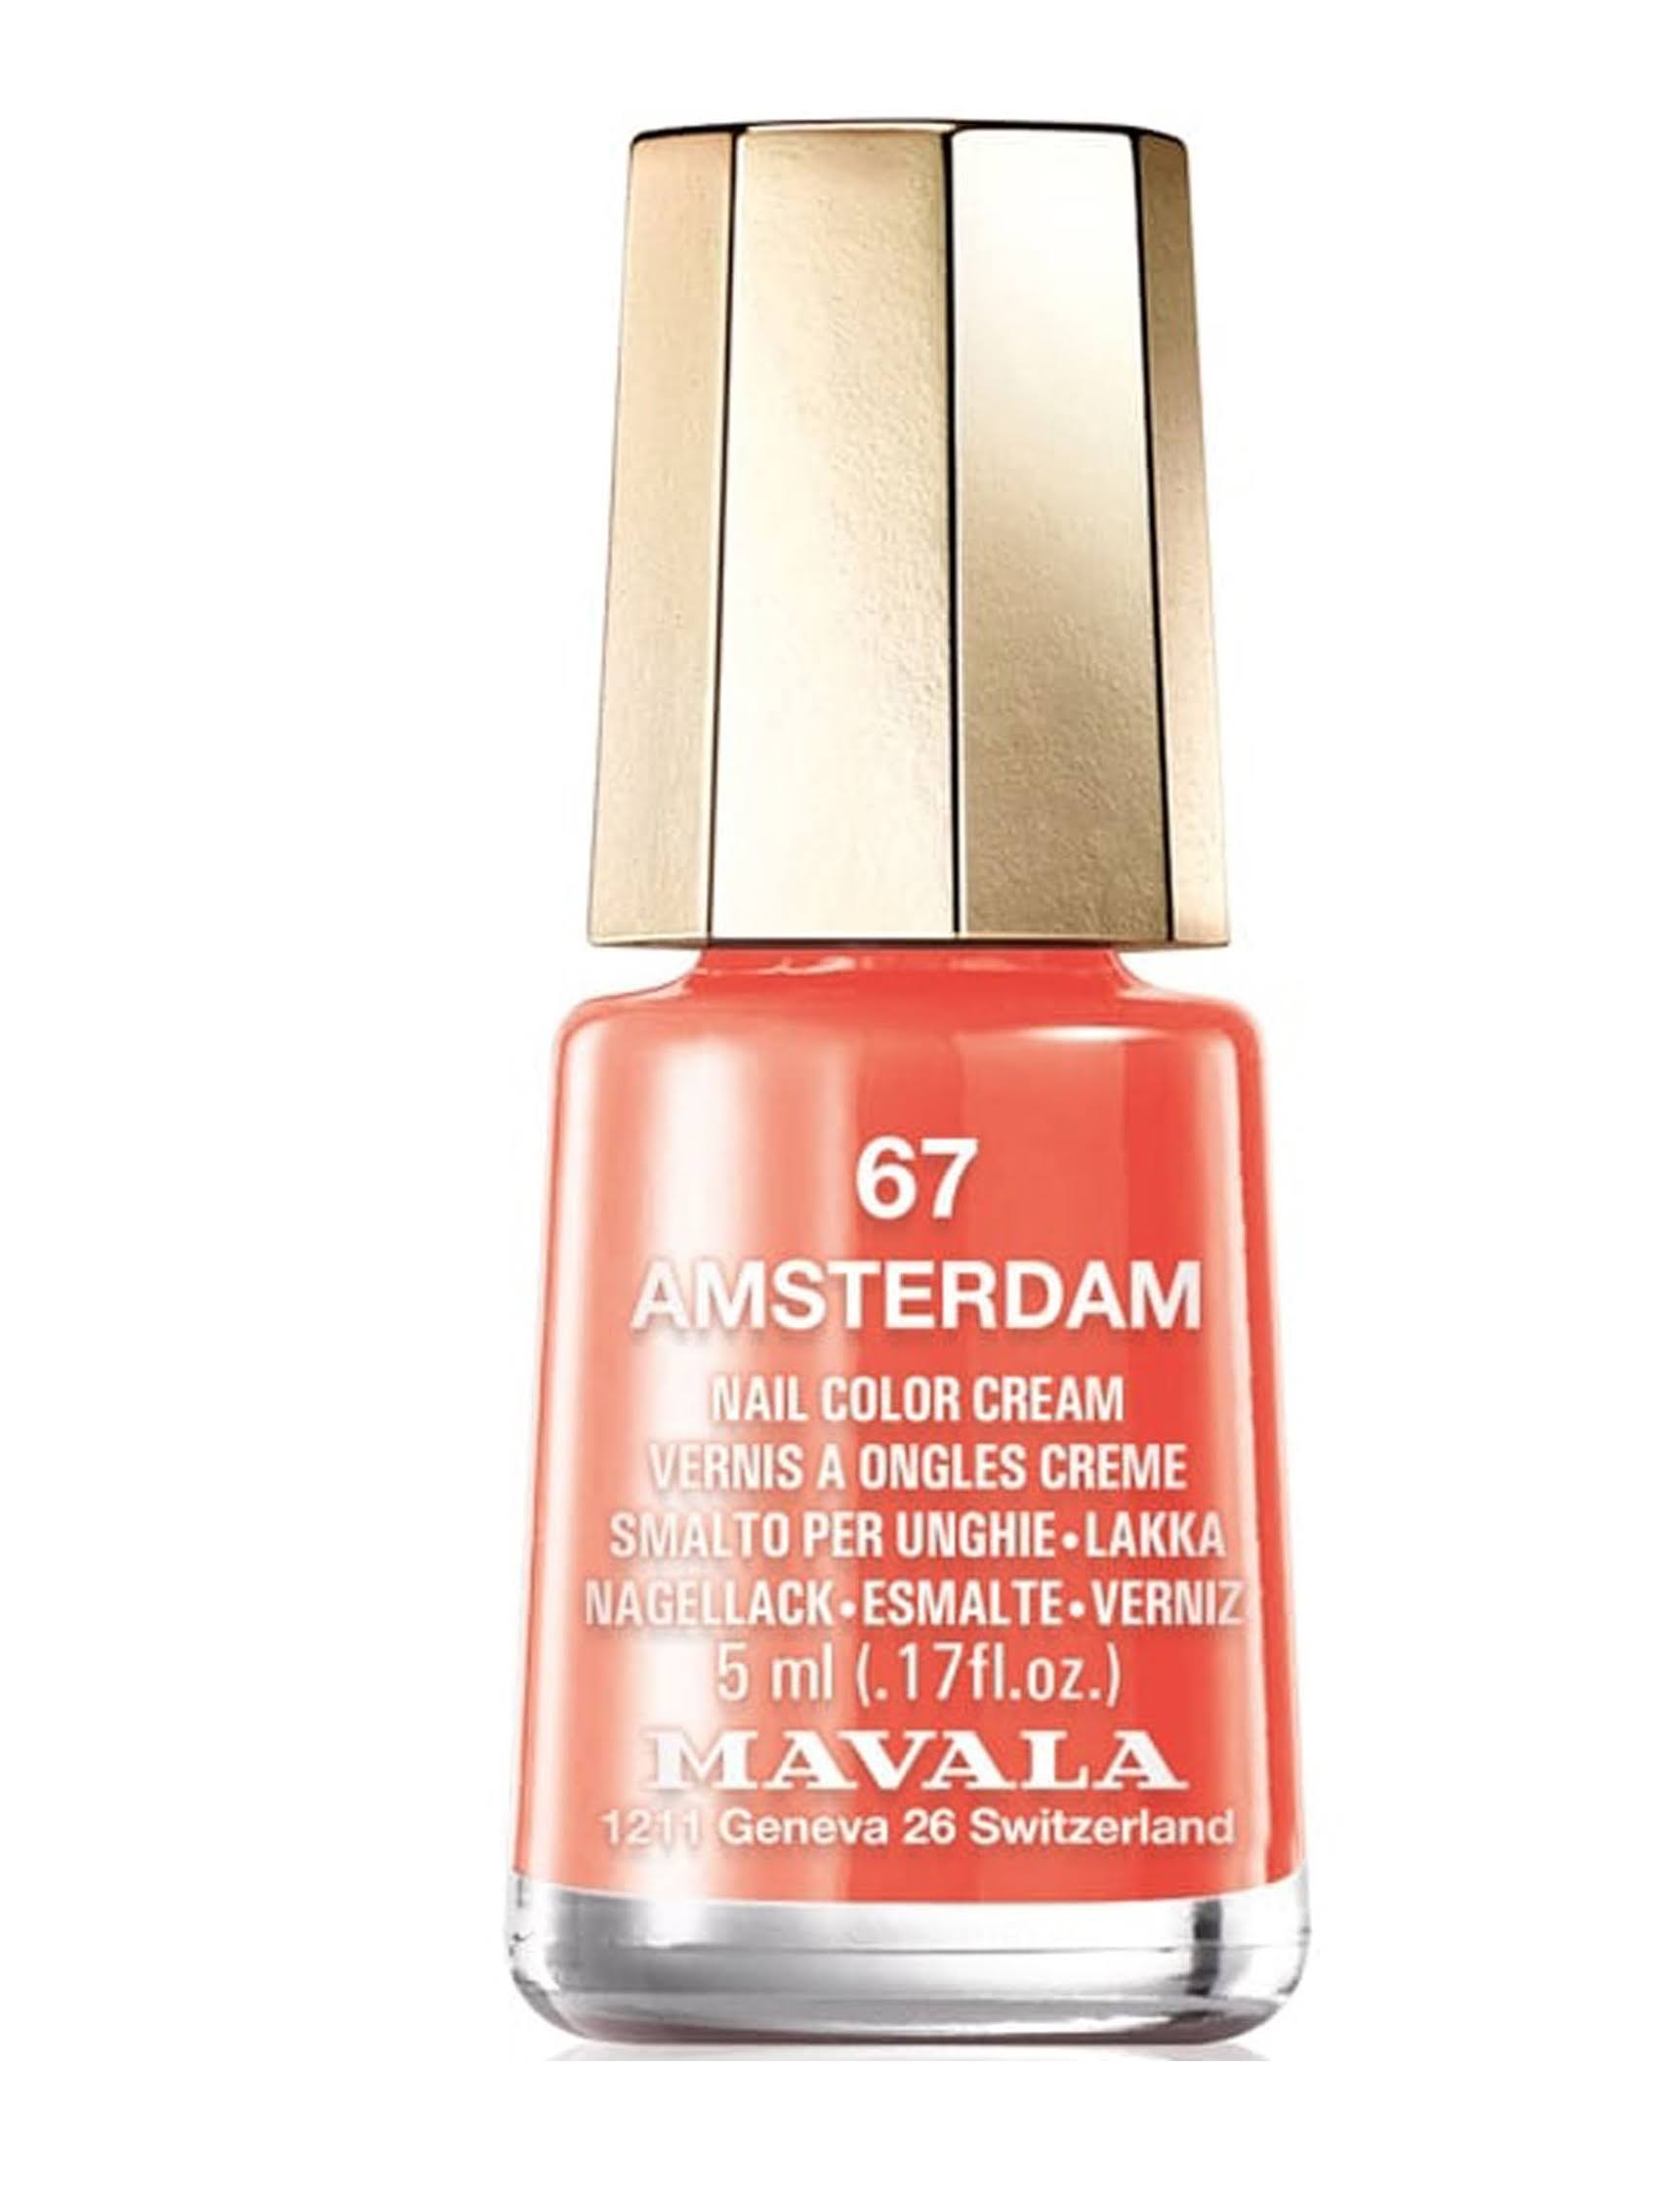 Mavala Mini Color Creme Gel Effect Nail Polish - Amsterdam (67) 5ml